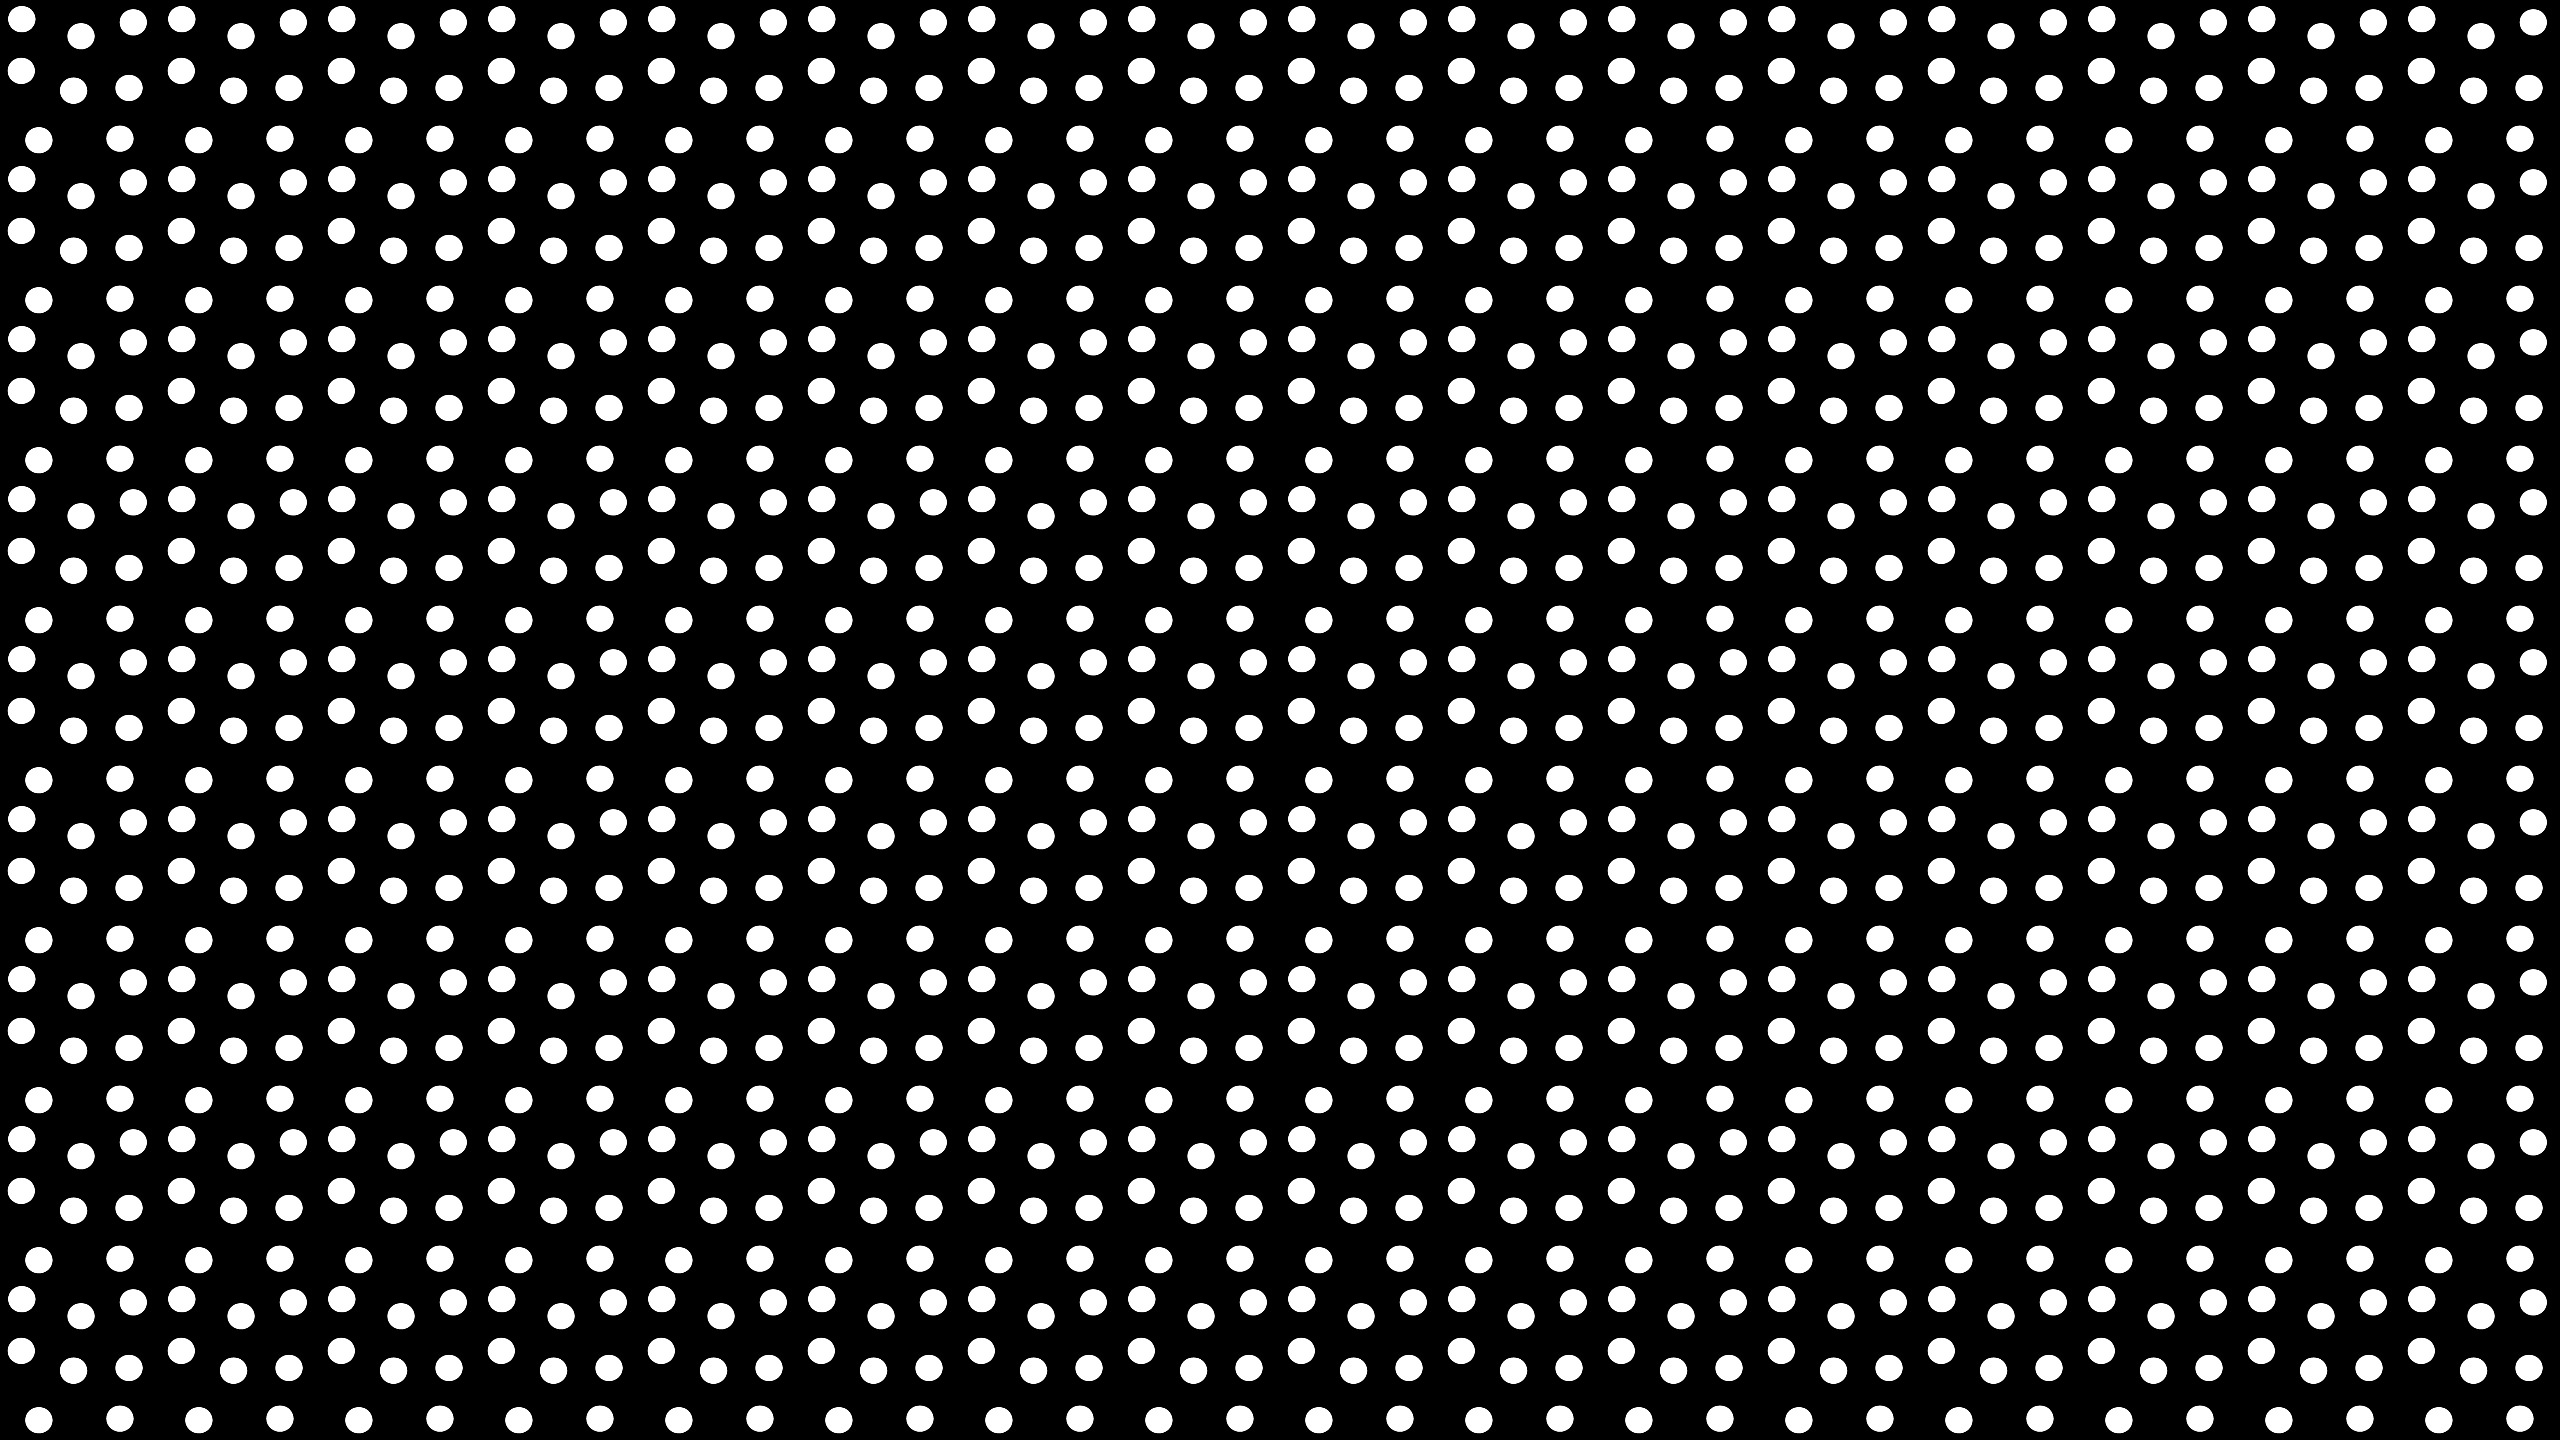 2560x1440 Black Polka Dots Desktop Wallpaper is easy. Just save the wallpaper .